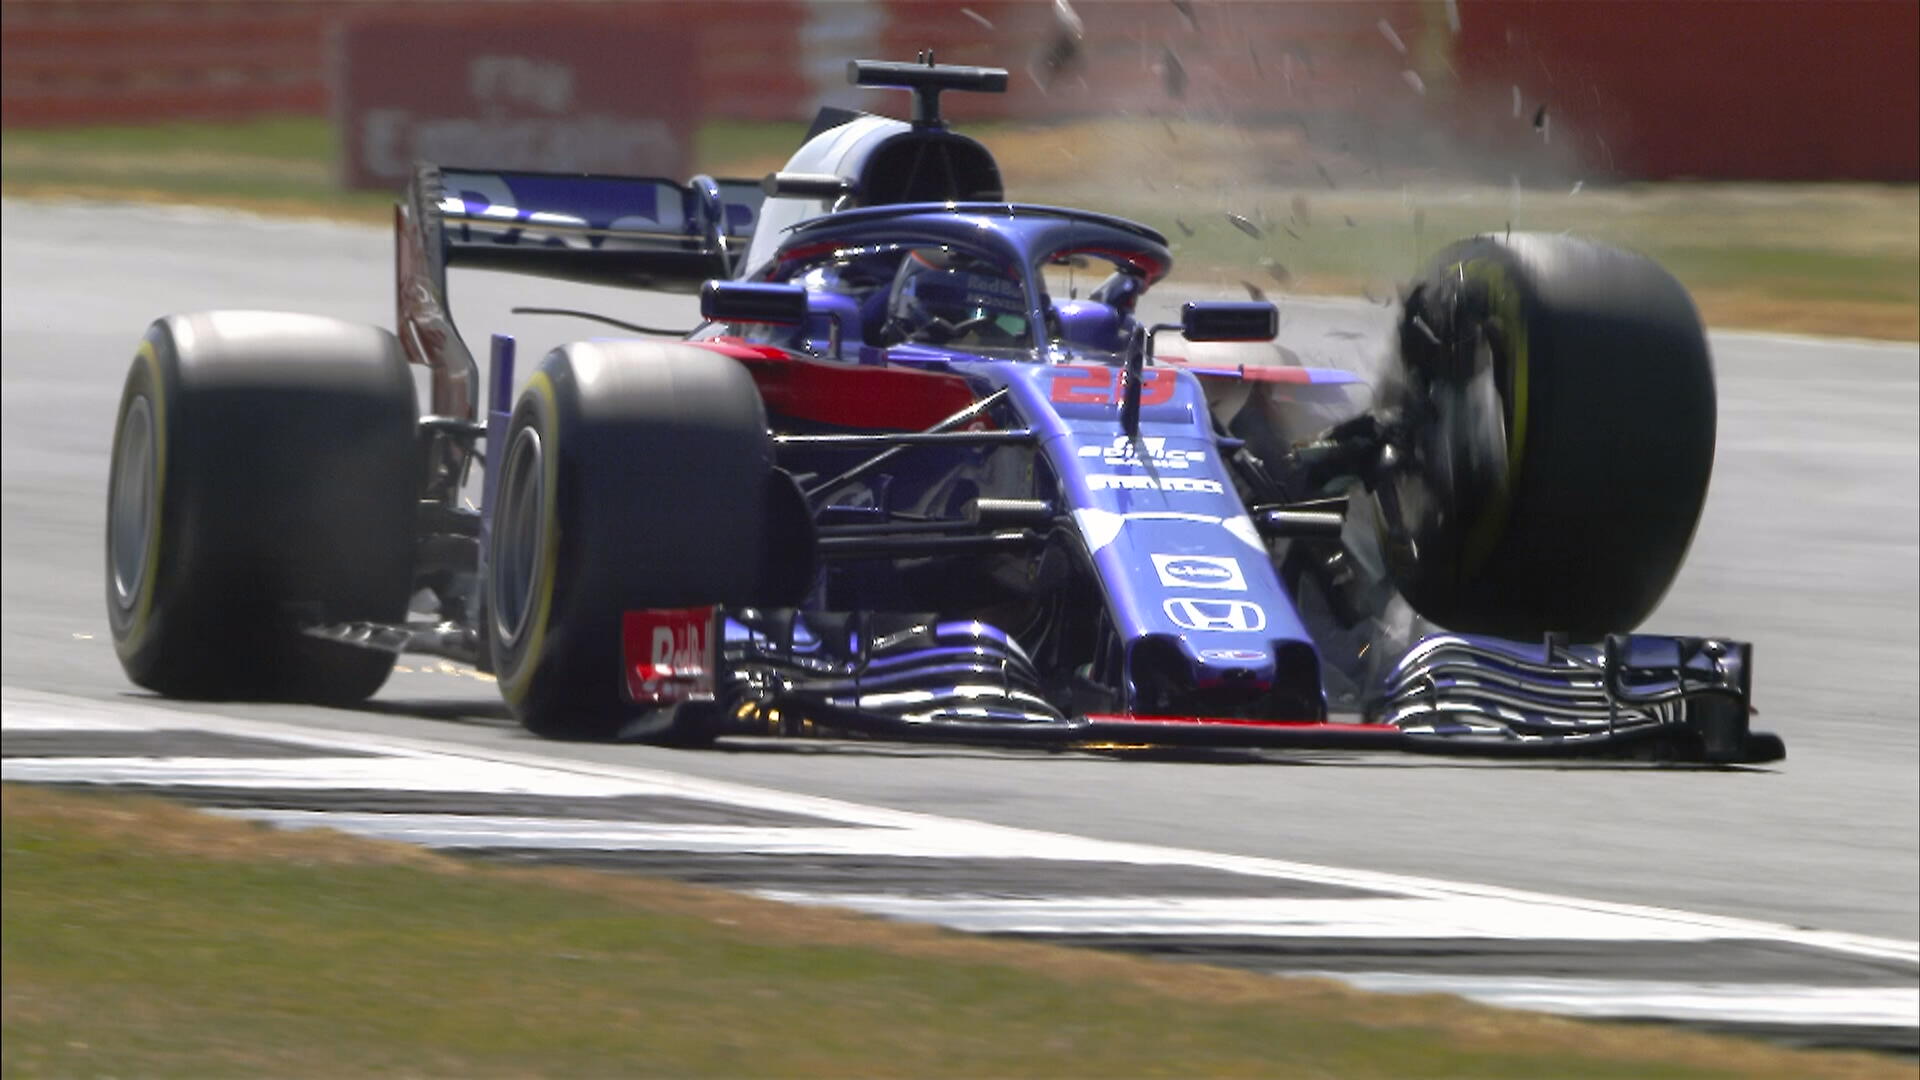 Hartley's front suspension fails